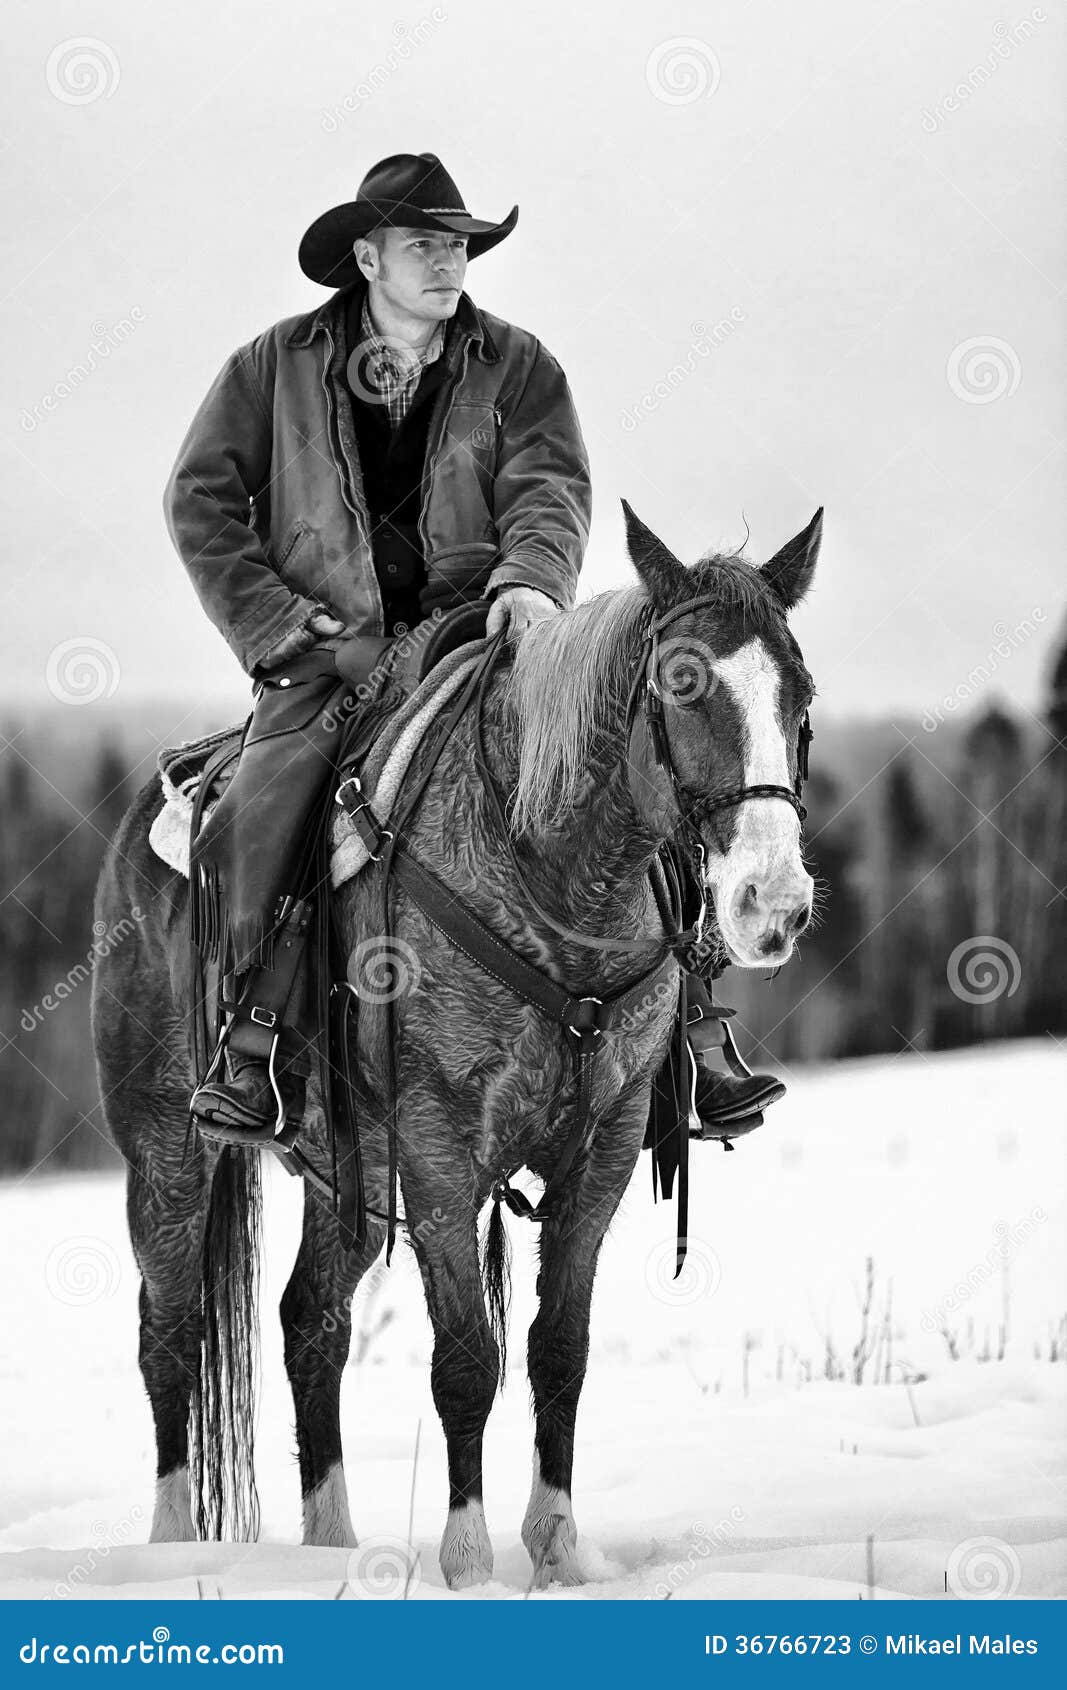 527 Horse Wrangler Stock Photos - Free & Royalty-Free Stock Photos from  Dreamstime